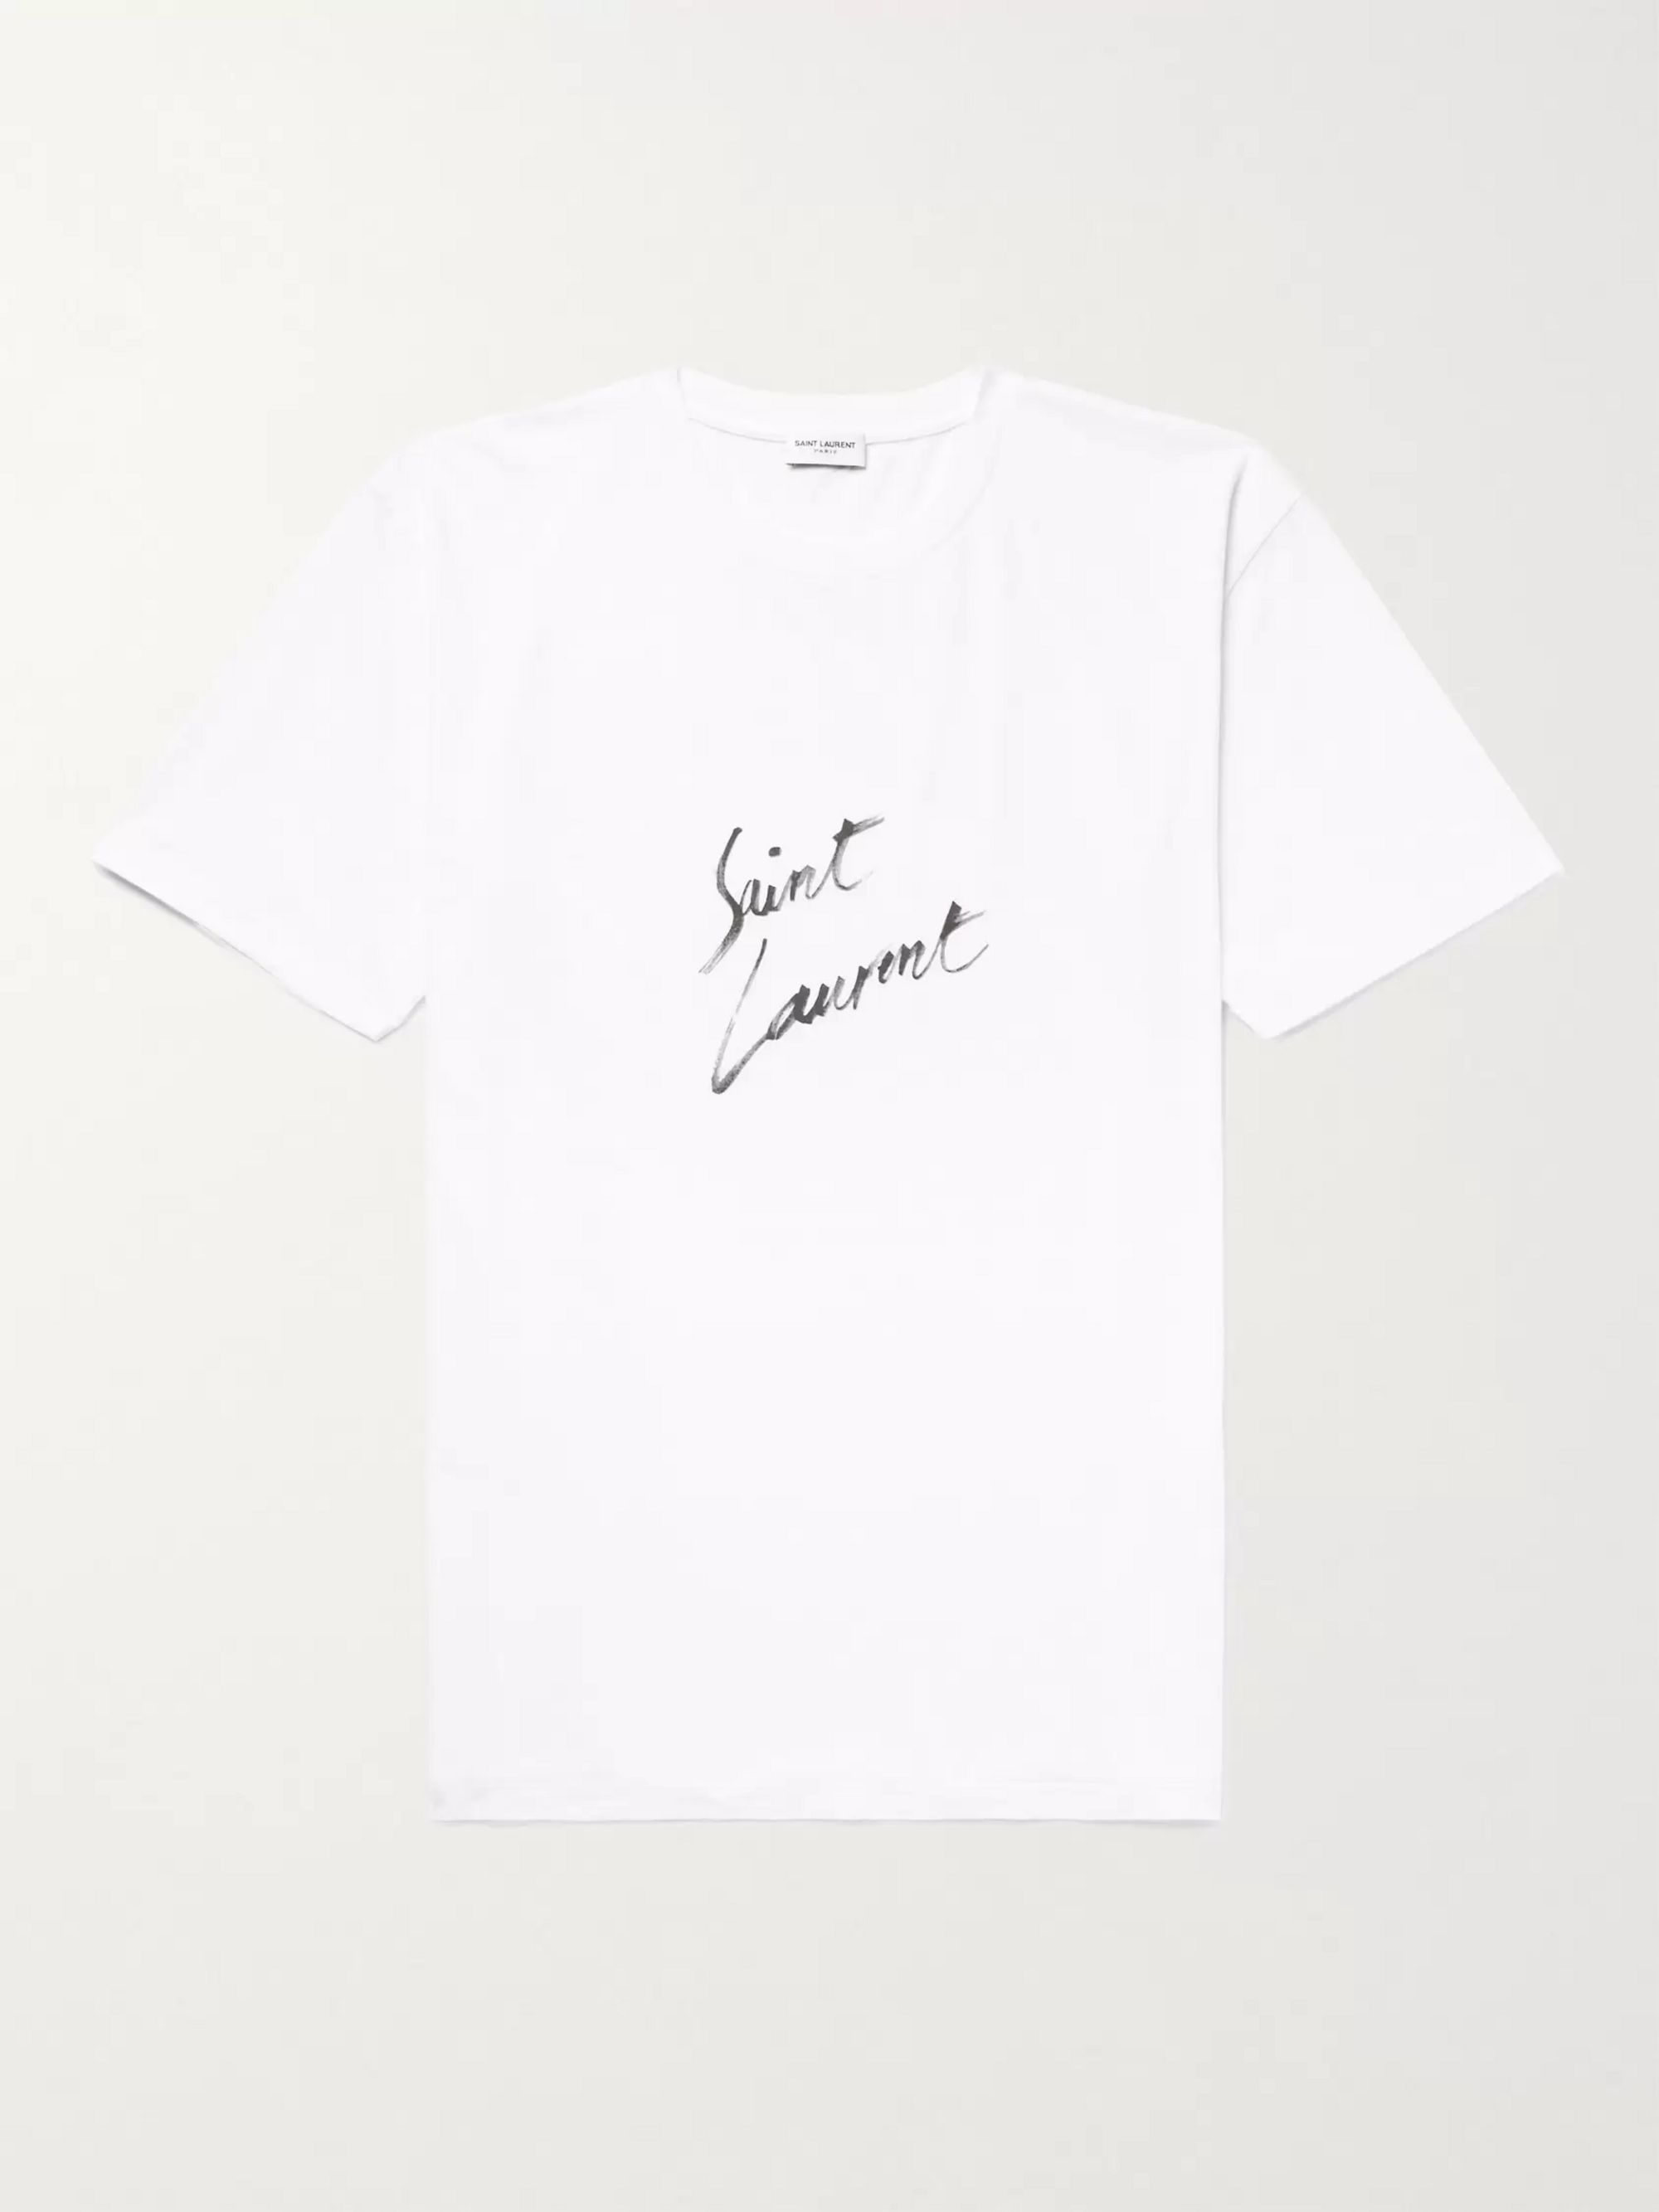 Saint Laurent Logo Shirt Flash Sales, 51% OFF | www.vetyvet.com